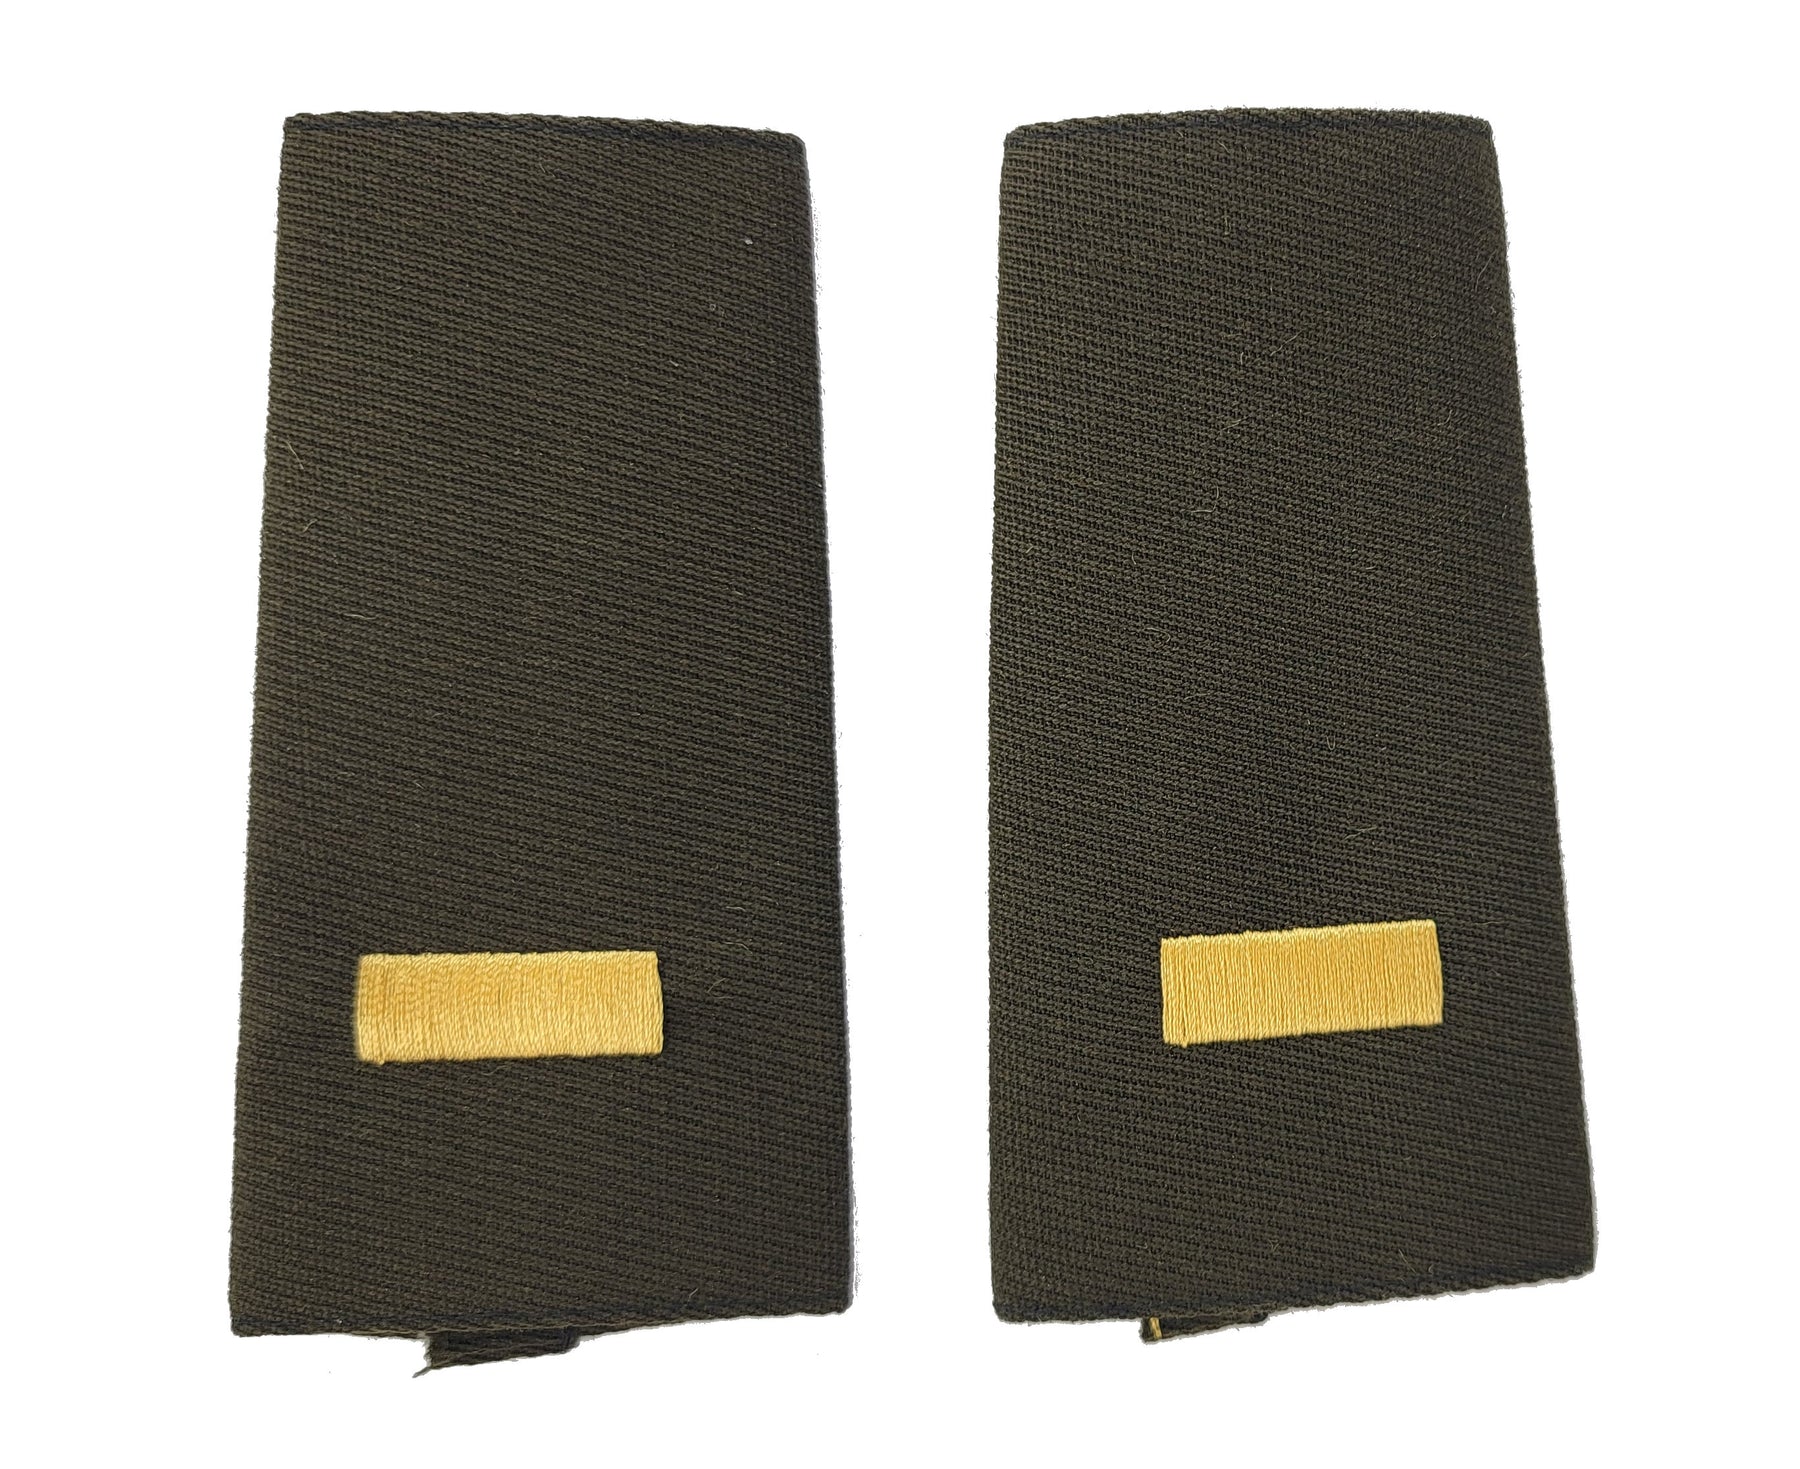 AGSU Army Epaulets - Shoulder Boards O-1 2ND LIEUTENANT